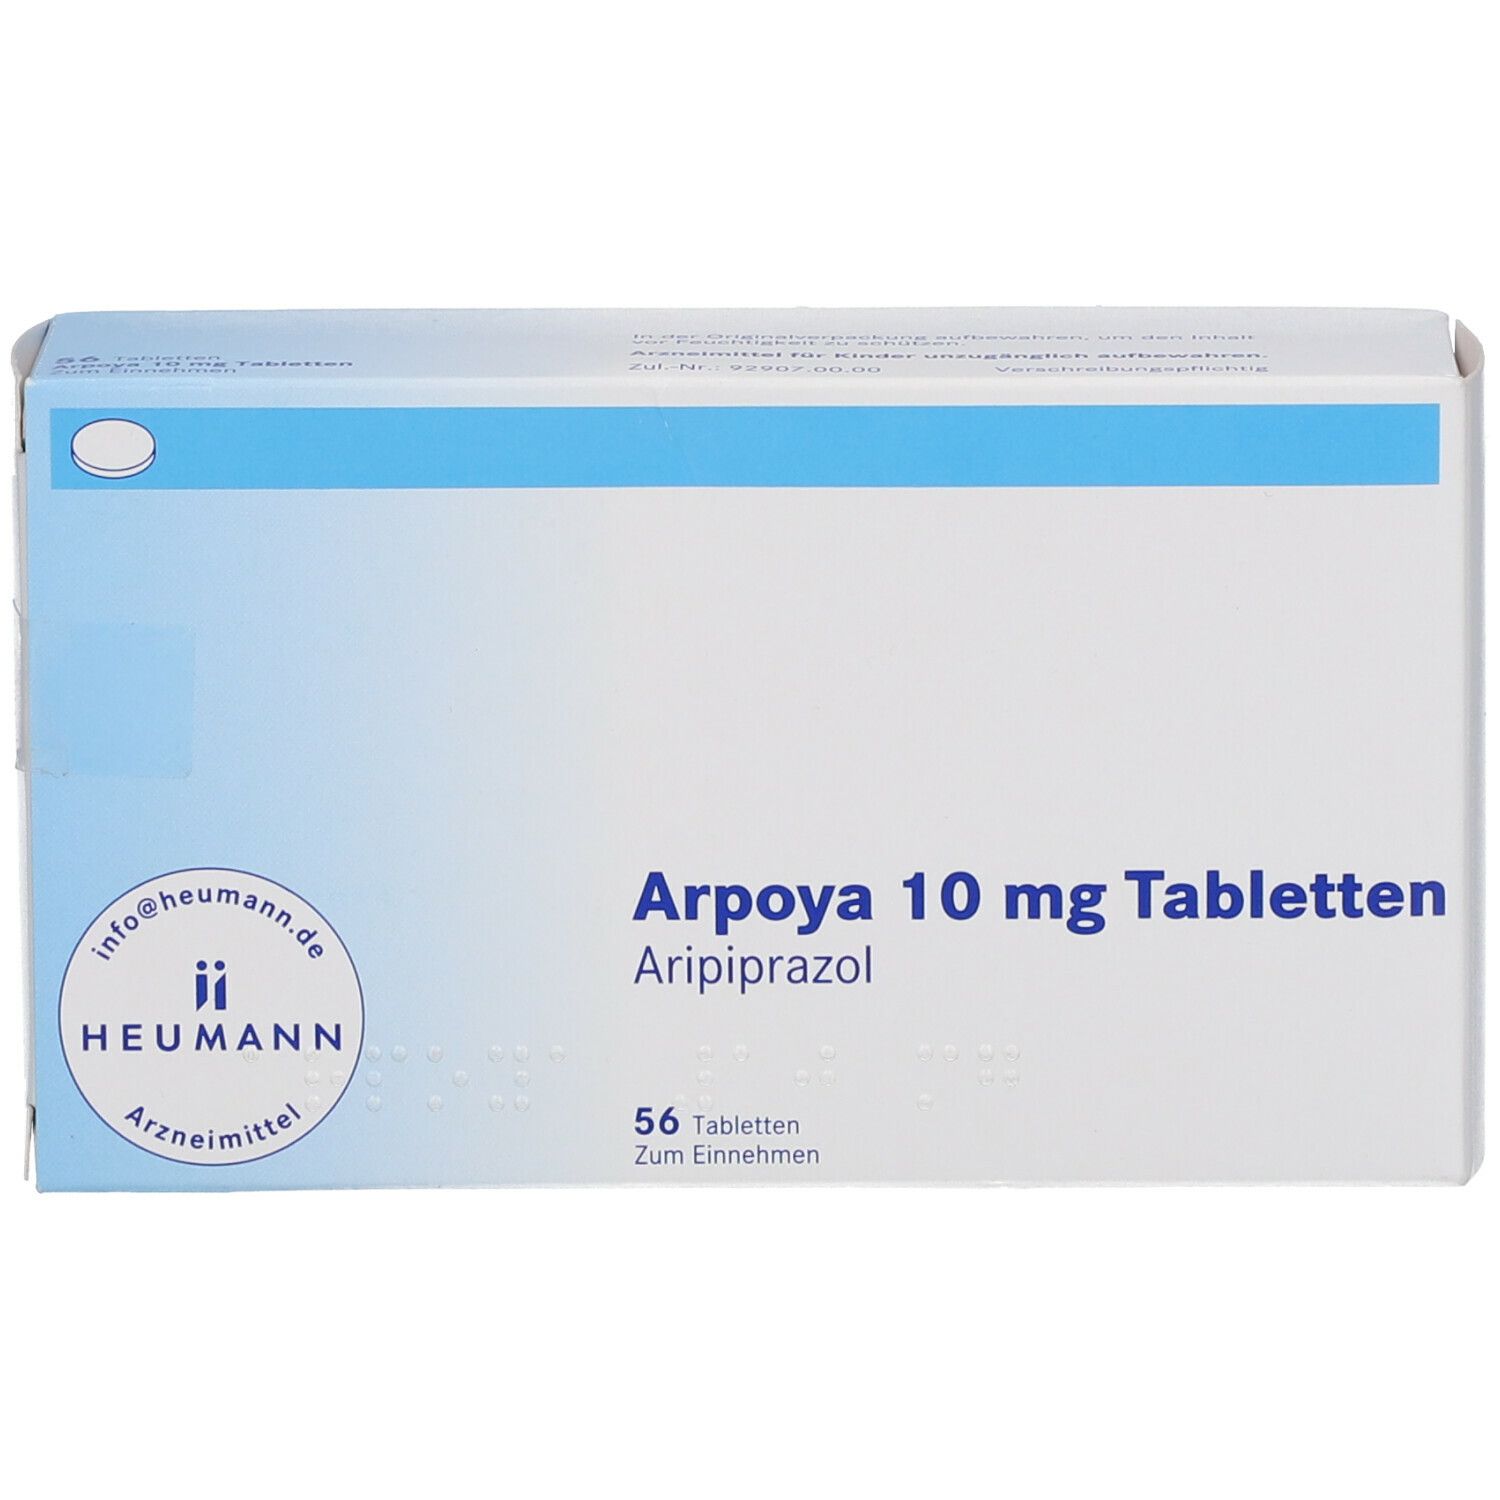 Arpoya 10 mg